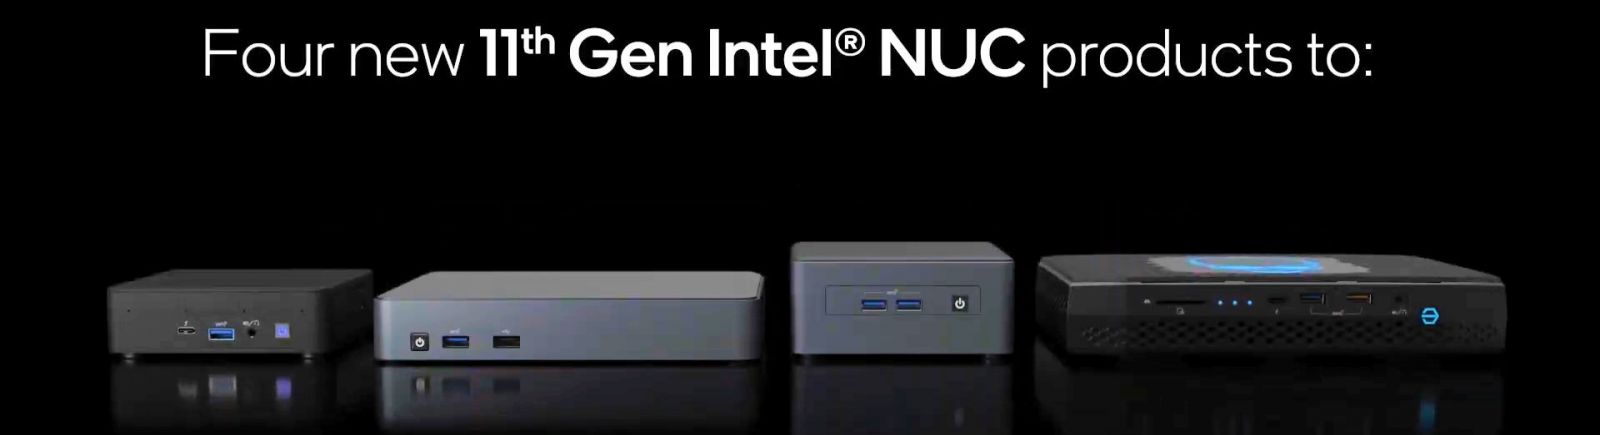 Intel-NUC-11-Series.jpg